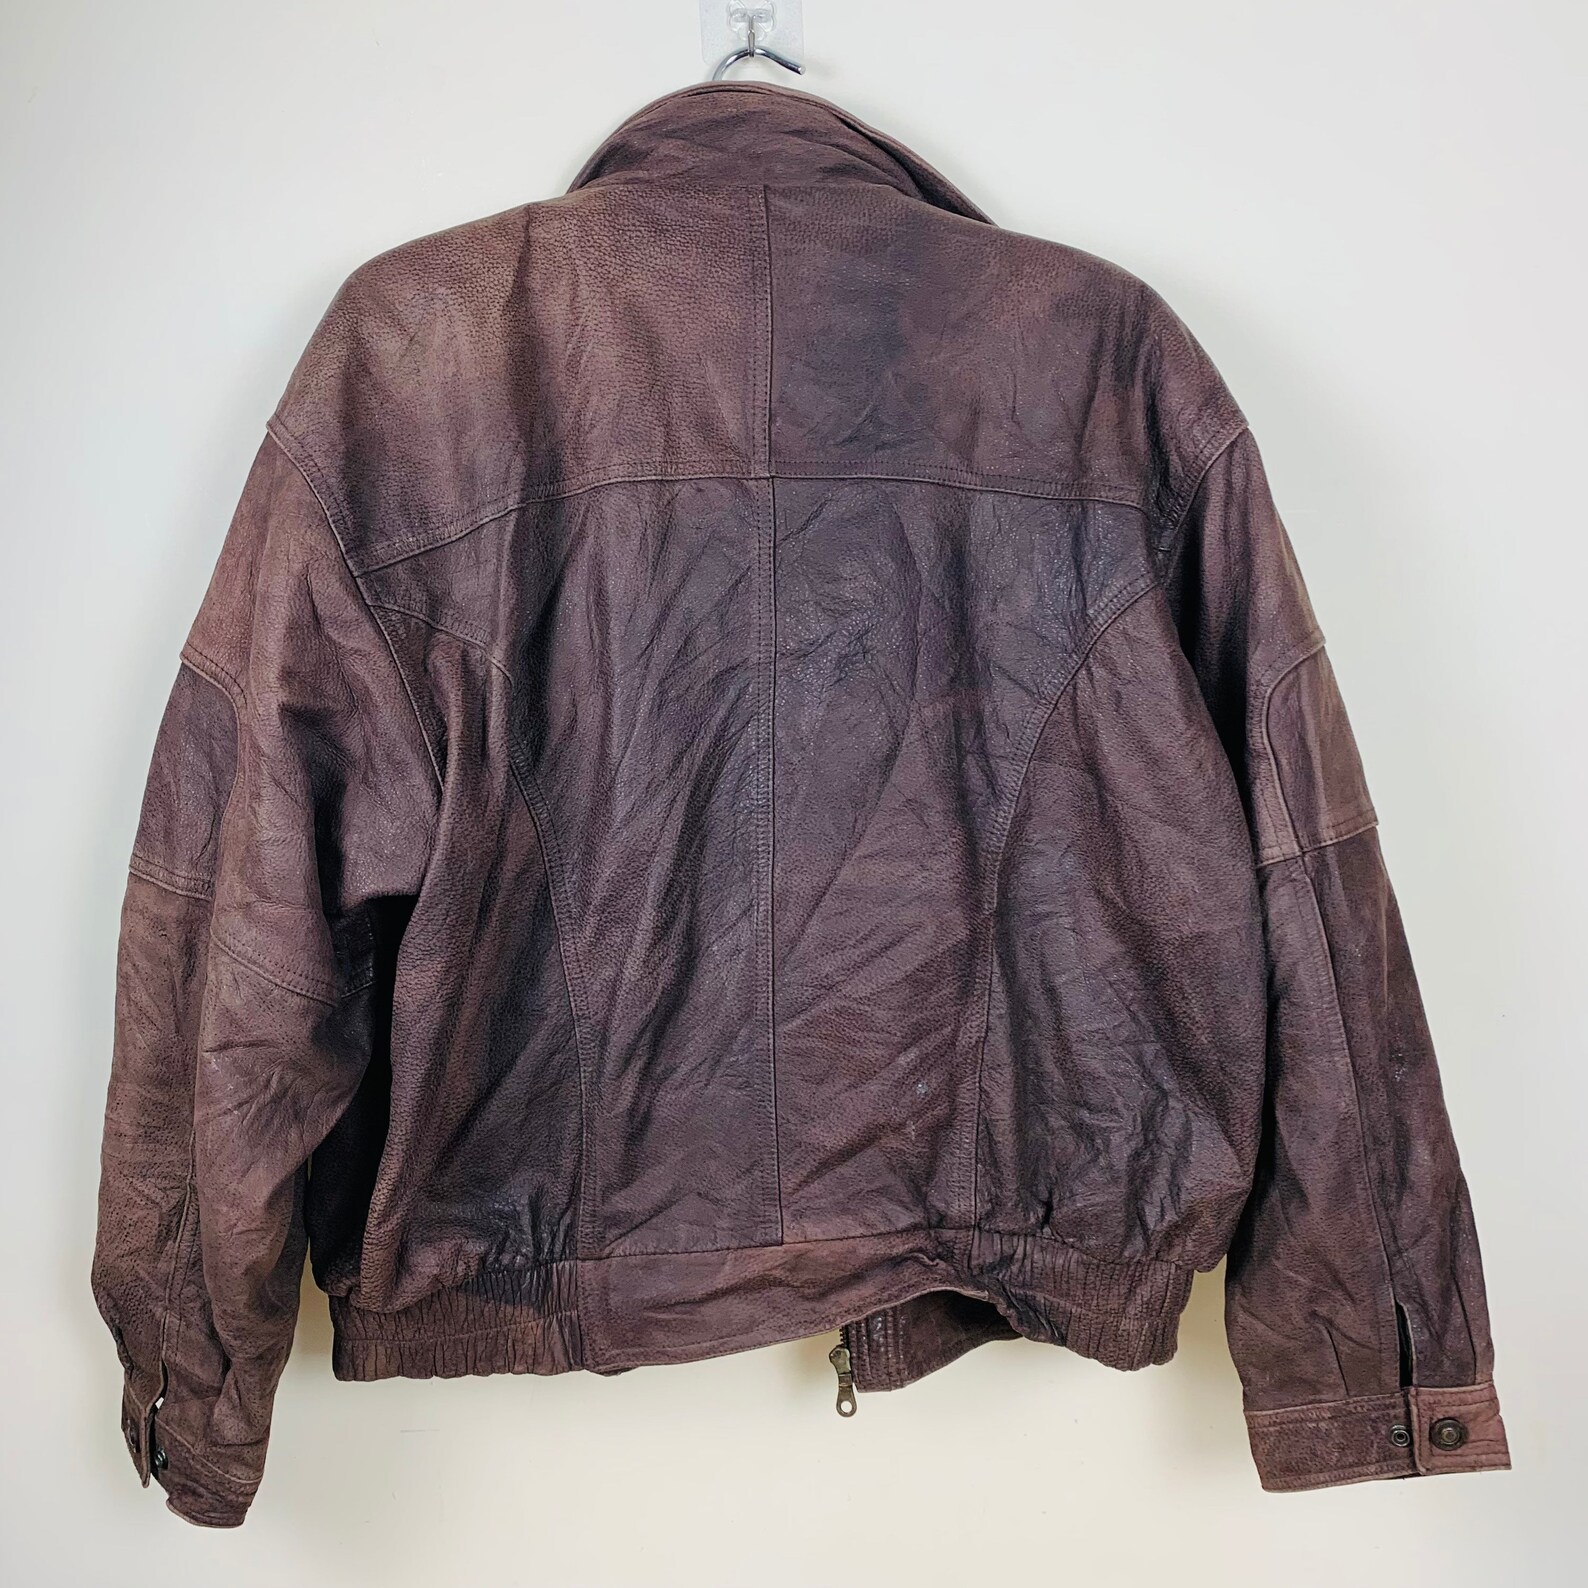 Adventure Bound Originals Vintage Leather Wilsons Bomber | Etsy